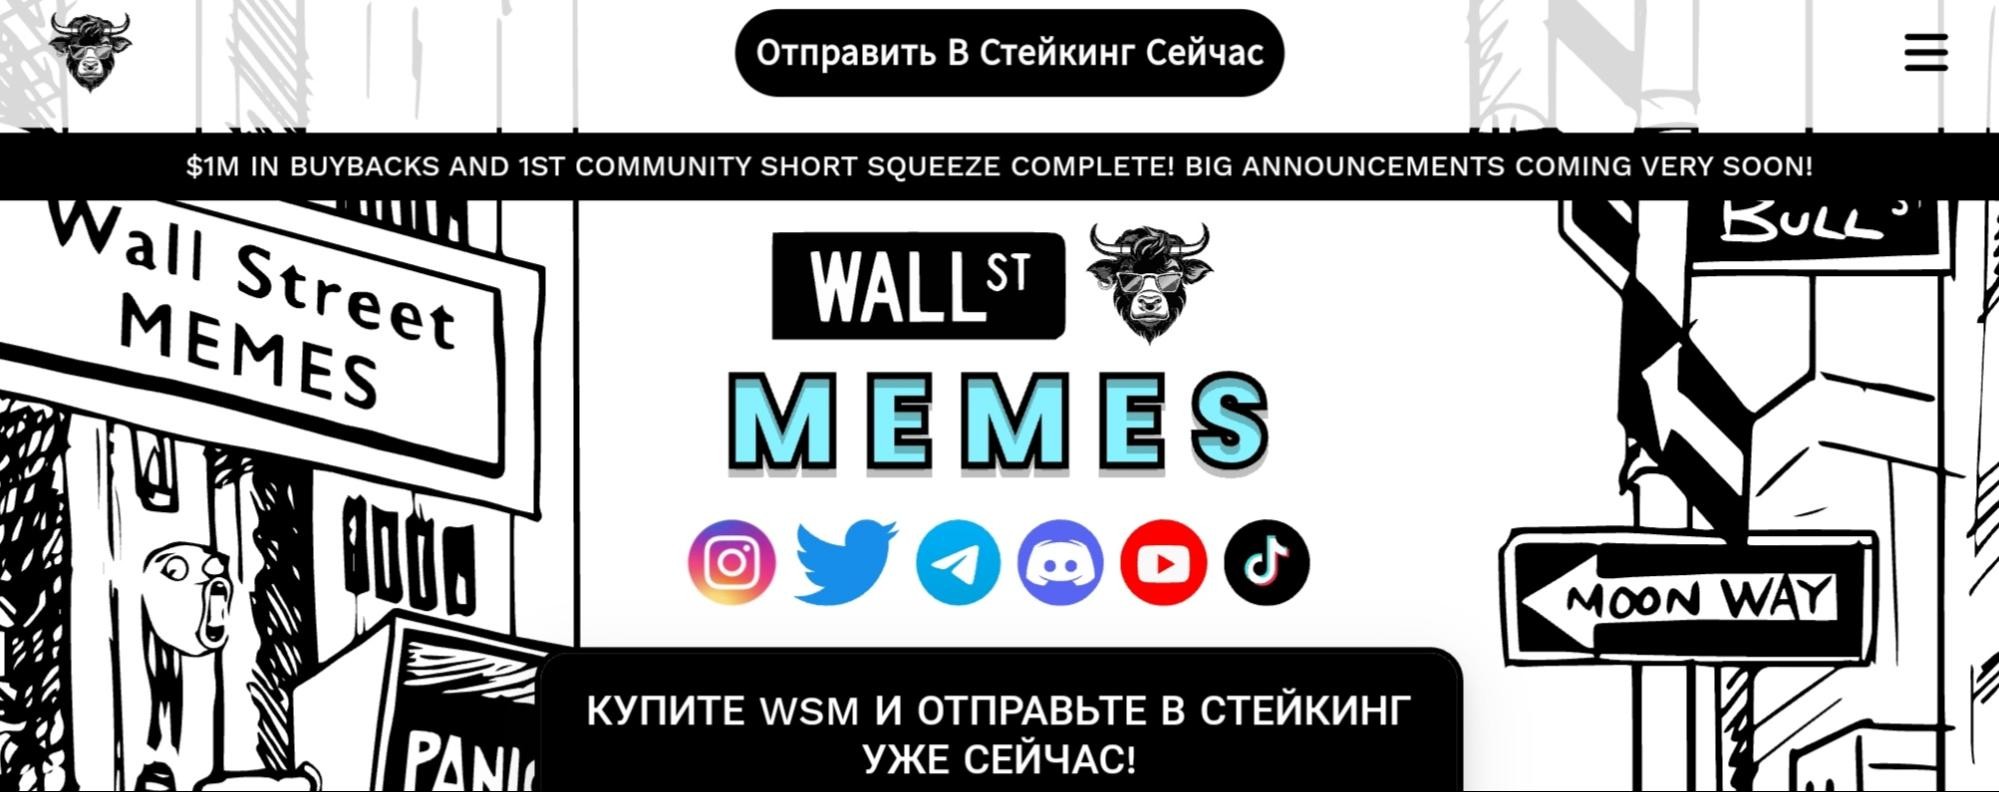 Wall Street Memes обзор проекта